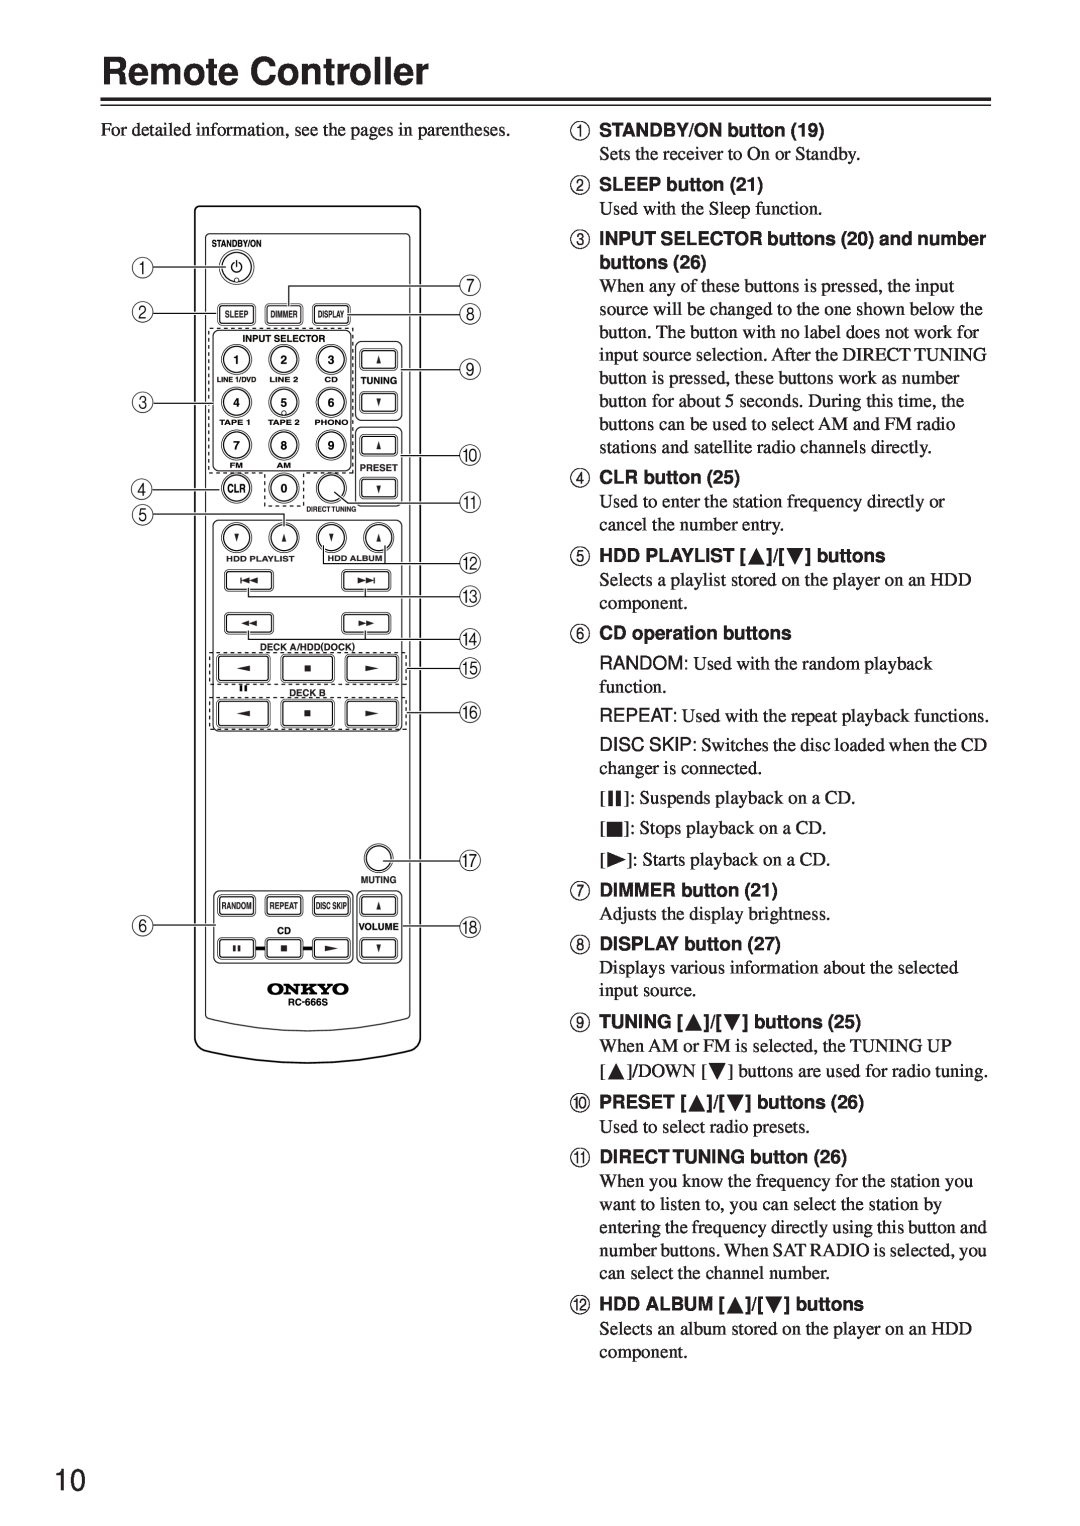 Onkyo TX-8255 instruction manual Remote Controller 